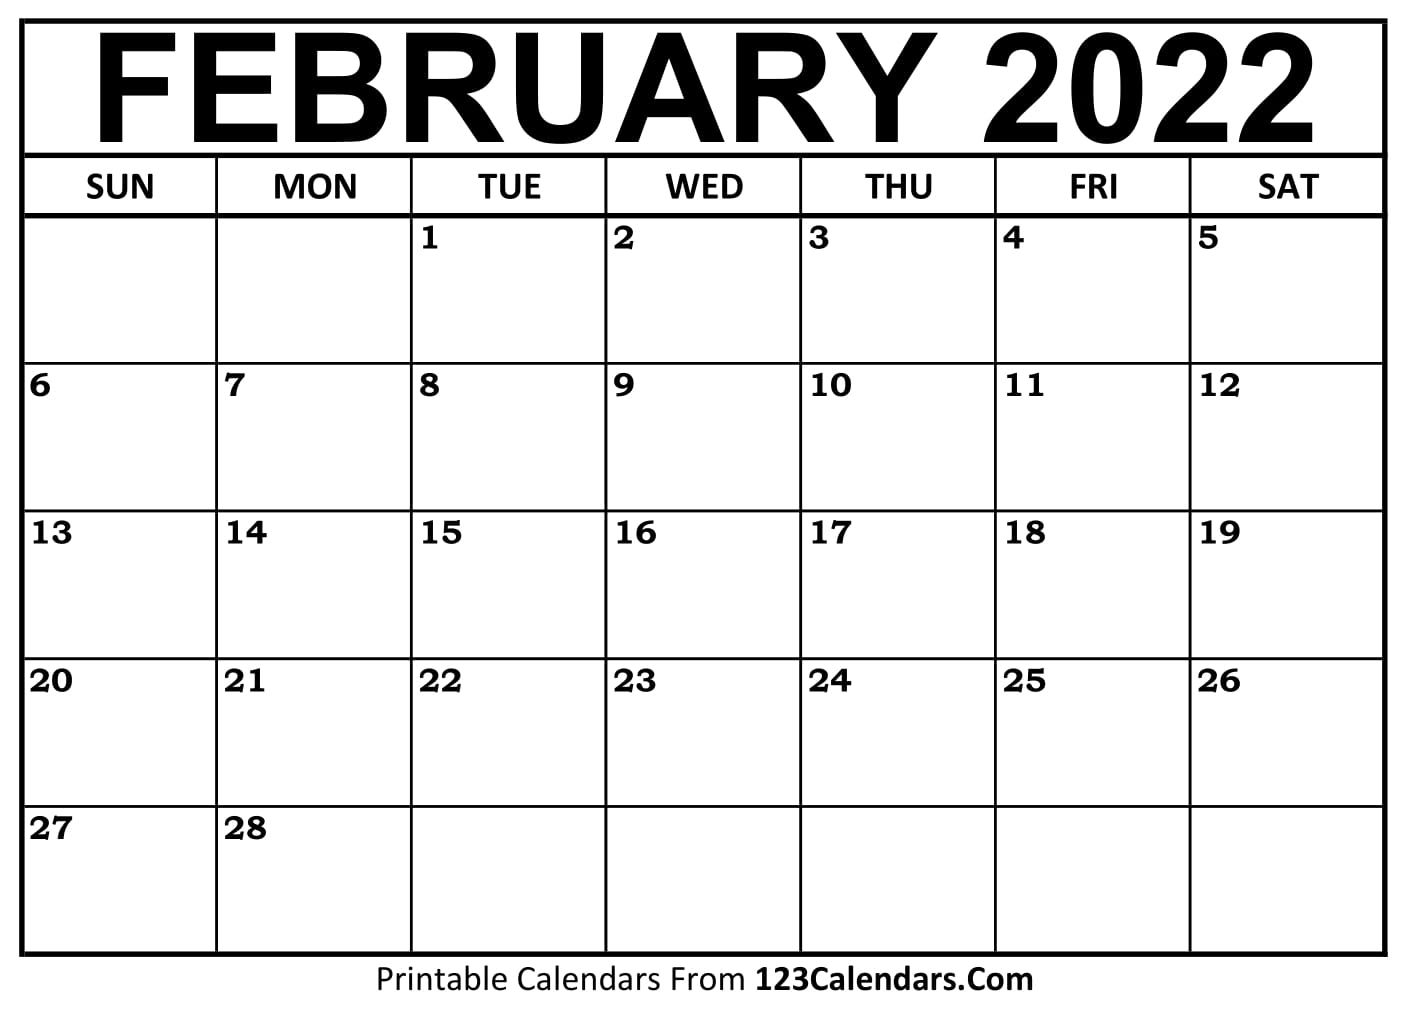 Printable February 2022 Calendar Templates - 123Calendars